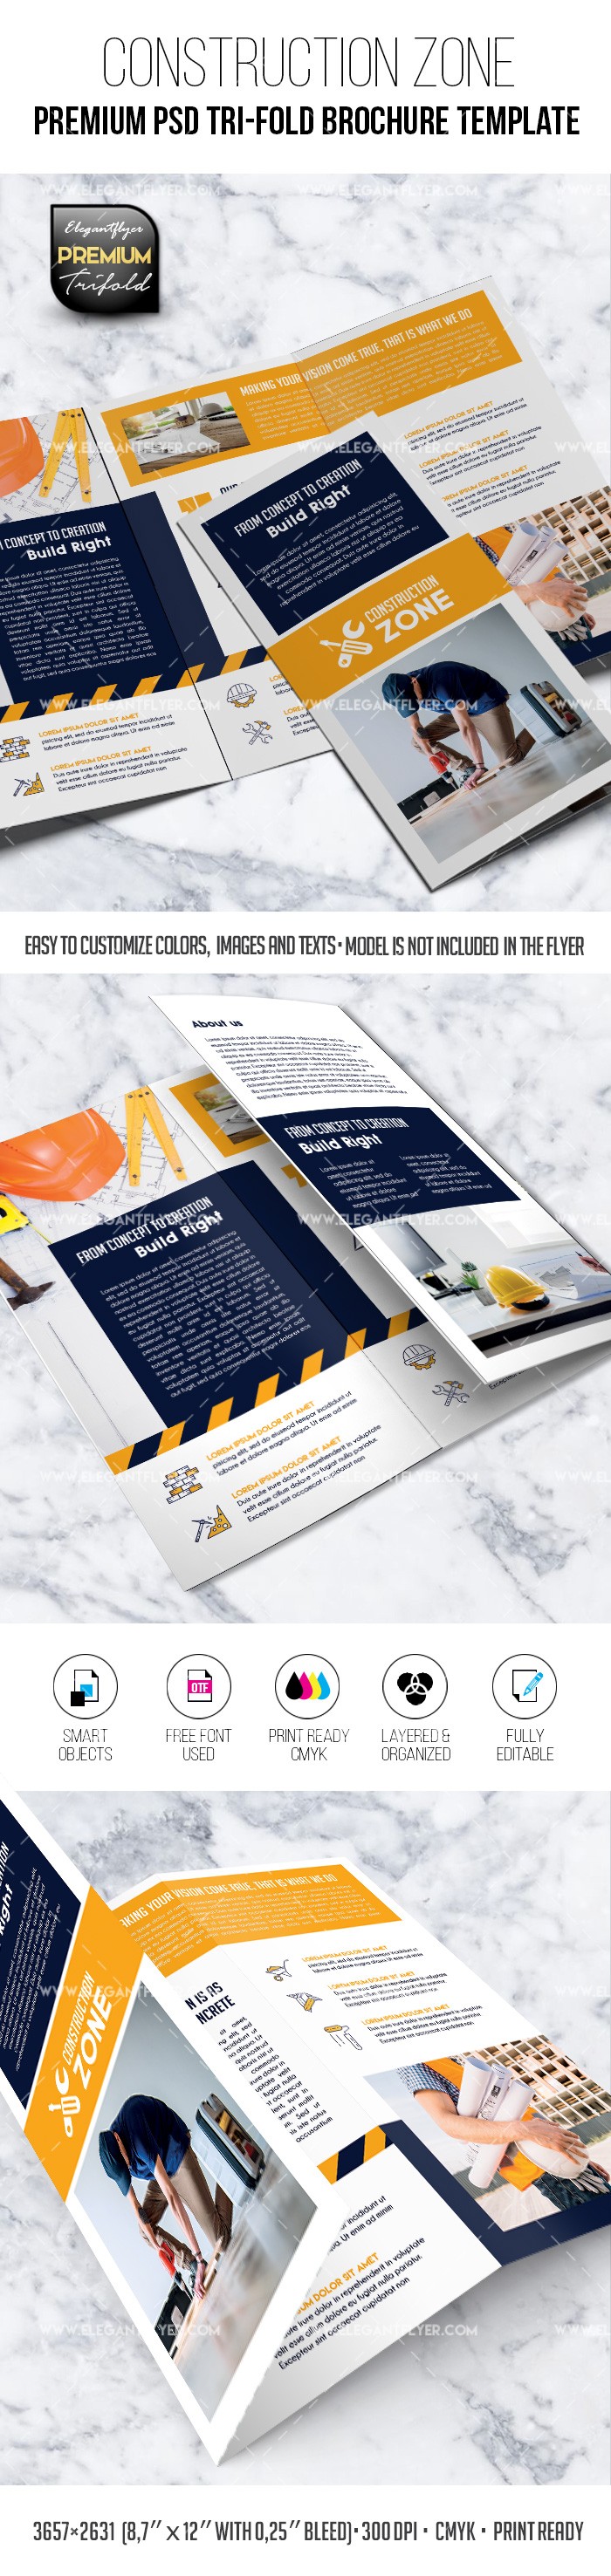 Construction Zone Brochure by ElegantFlyer